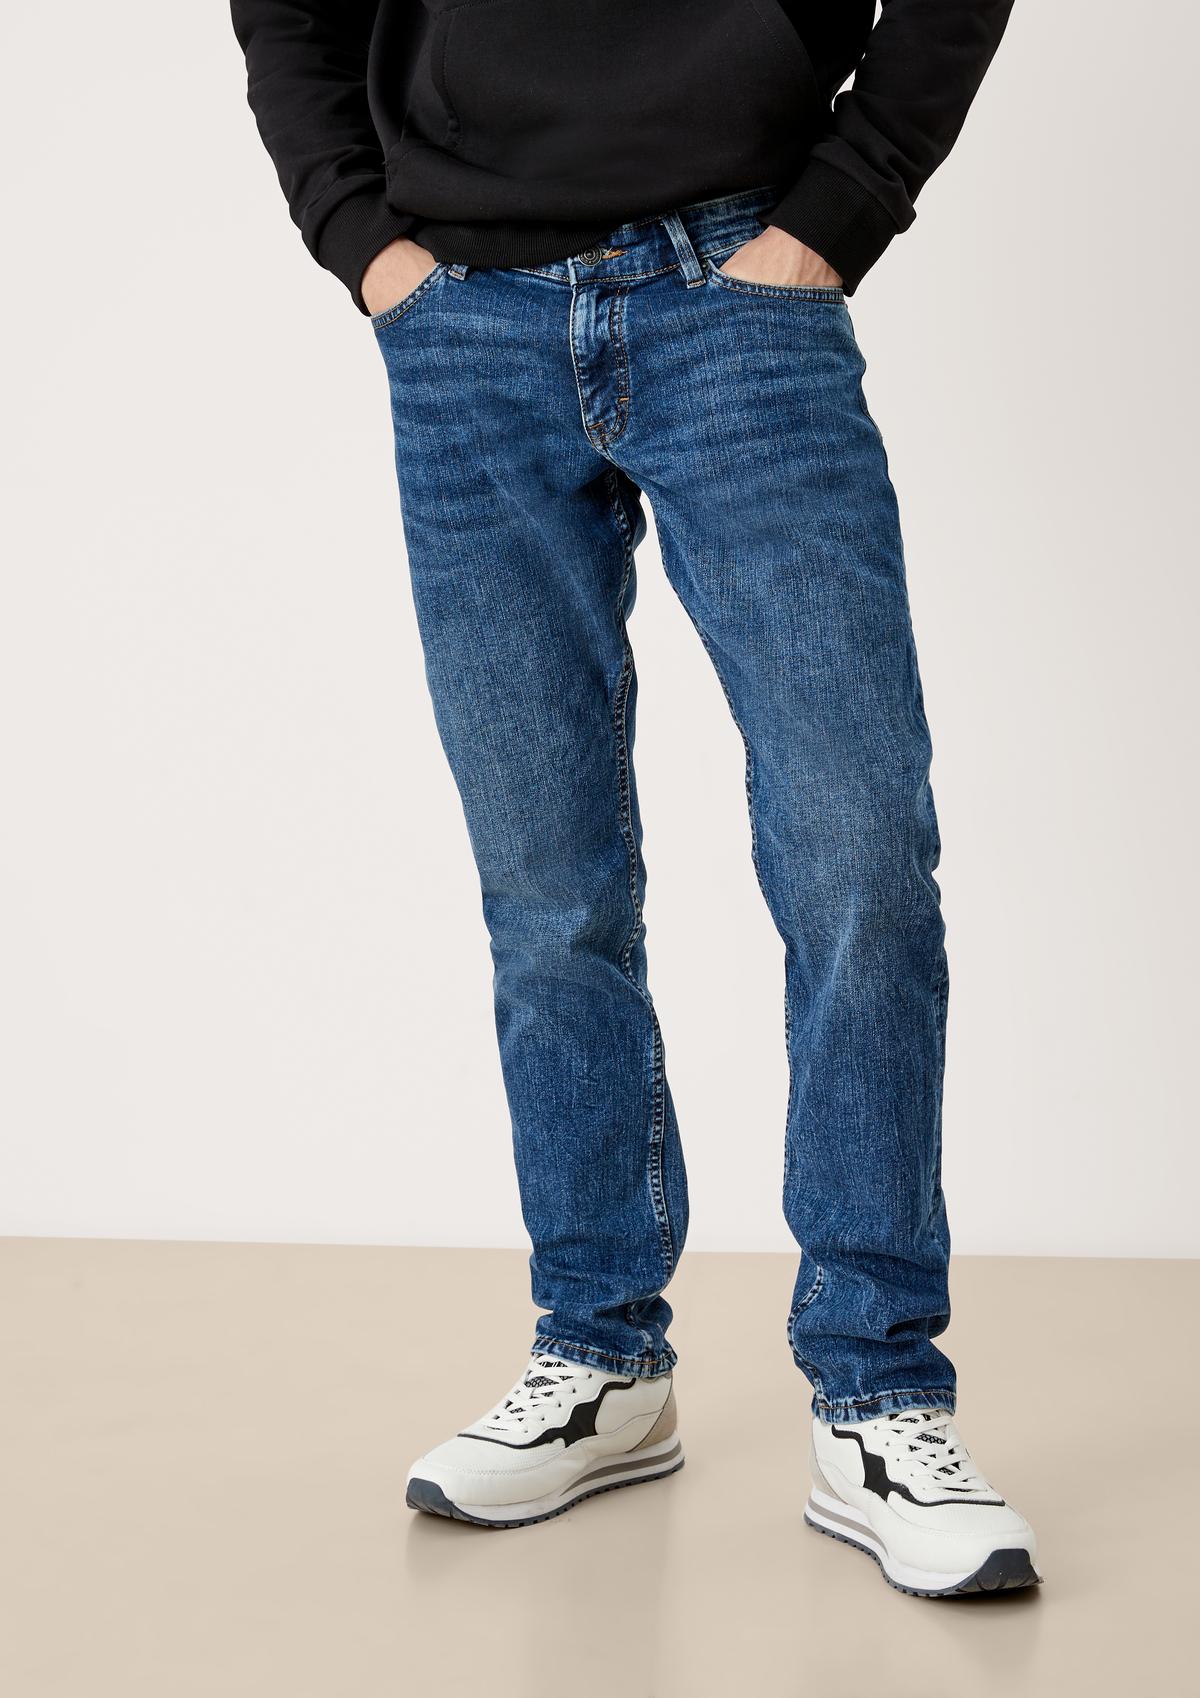 s.Oliver Rick jeans / slim fit / mid rise / slim leg